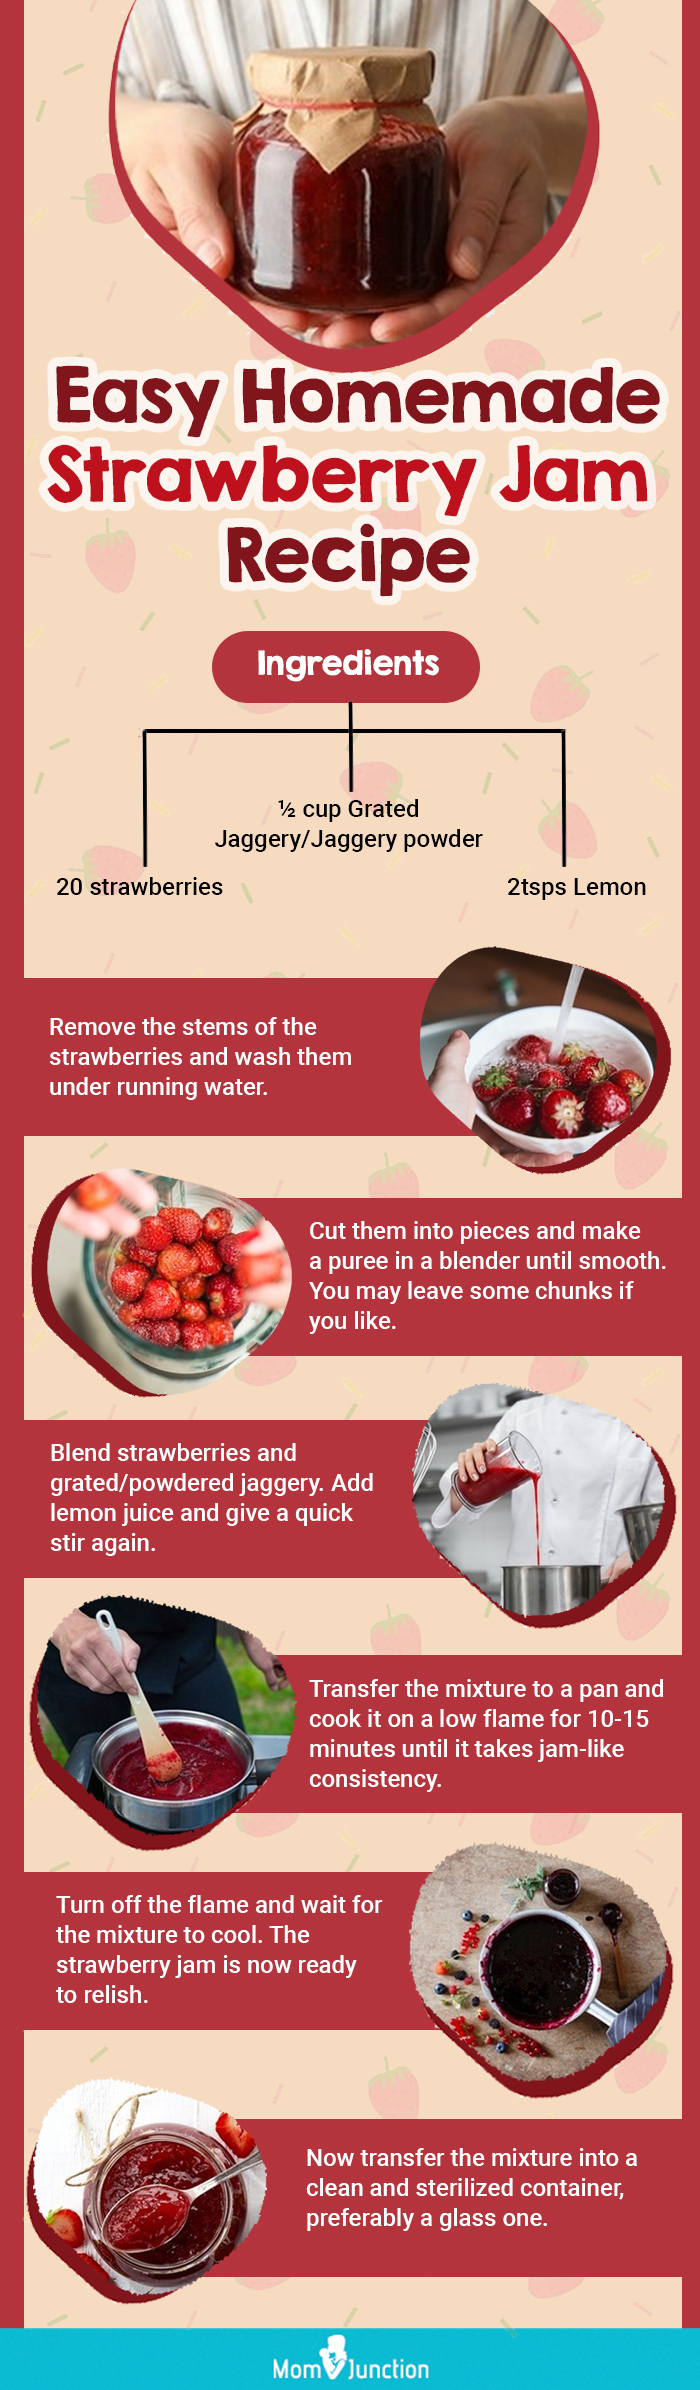 easy homemade strawberry jam recipe (infographic)